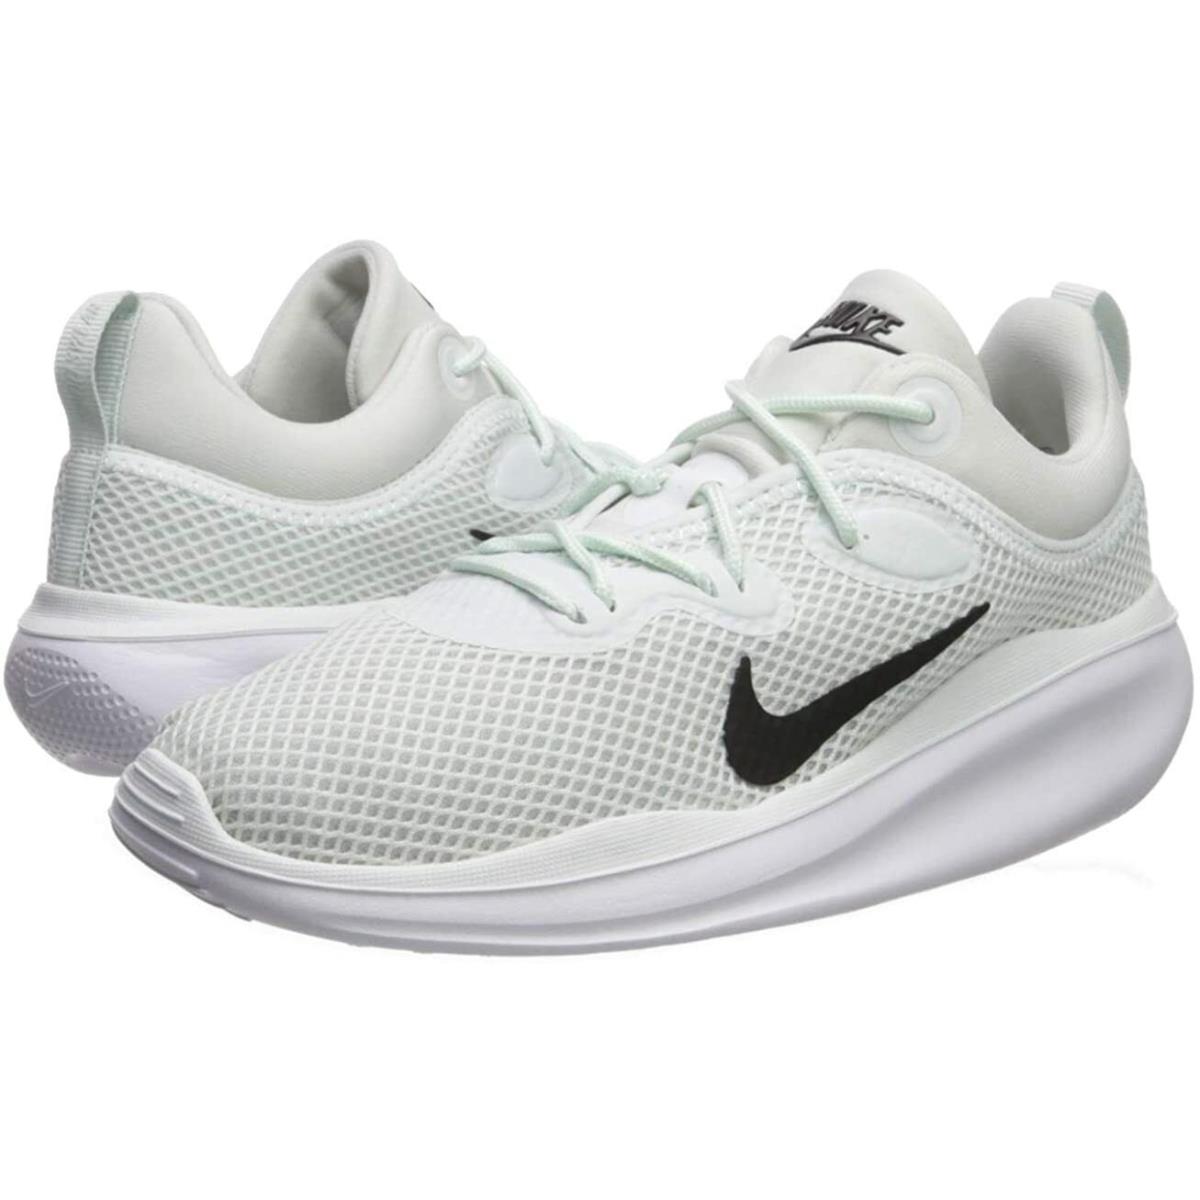 Nike Acmi Athletic Shoes Size 8 Color: Ghost Aqua/black - Off White - White